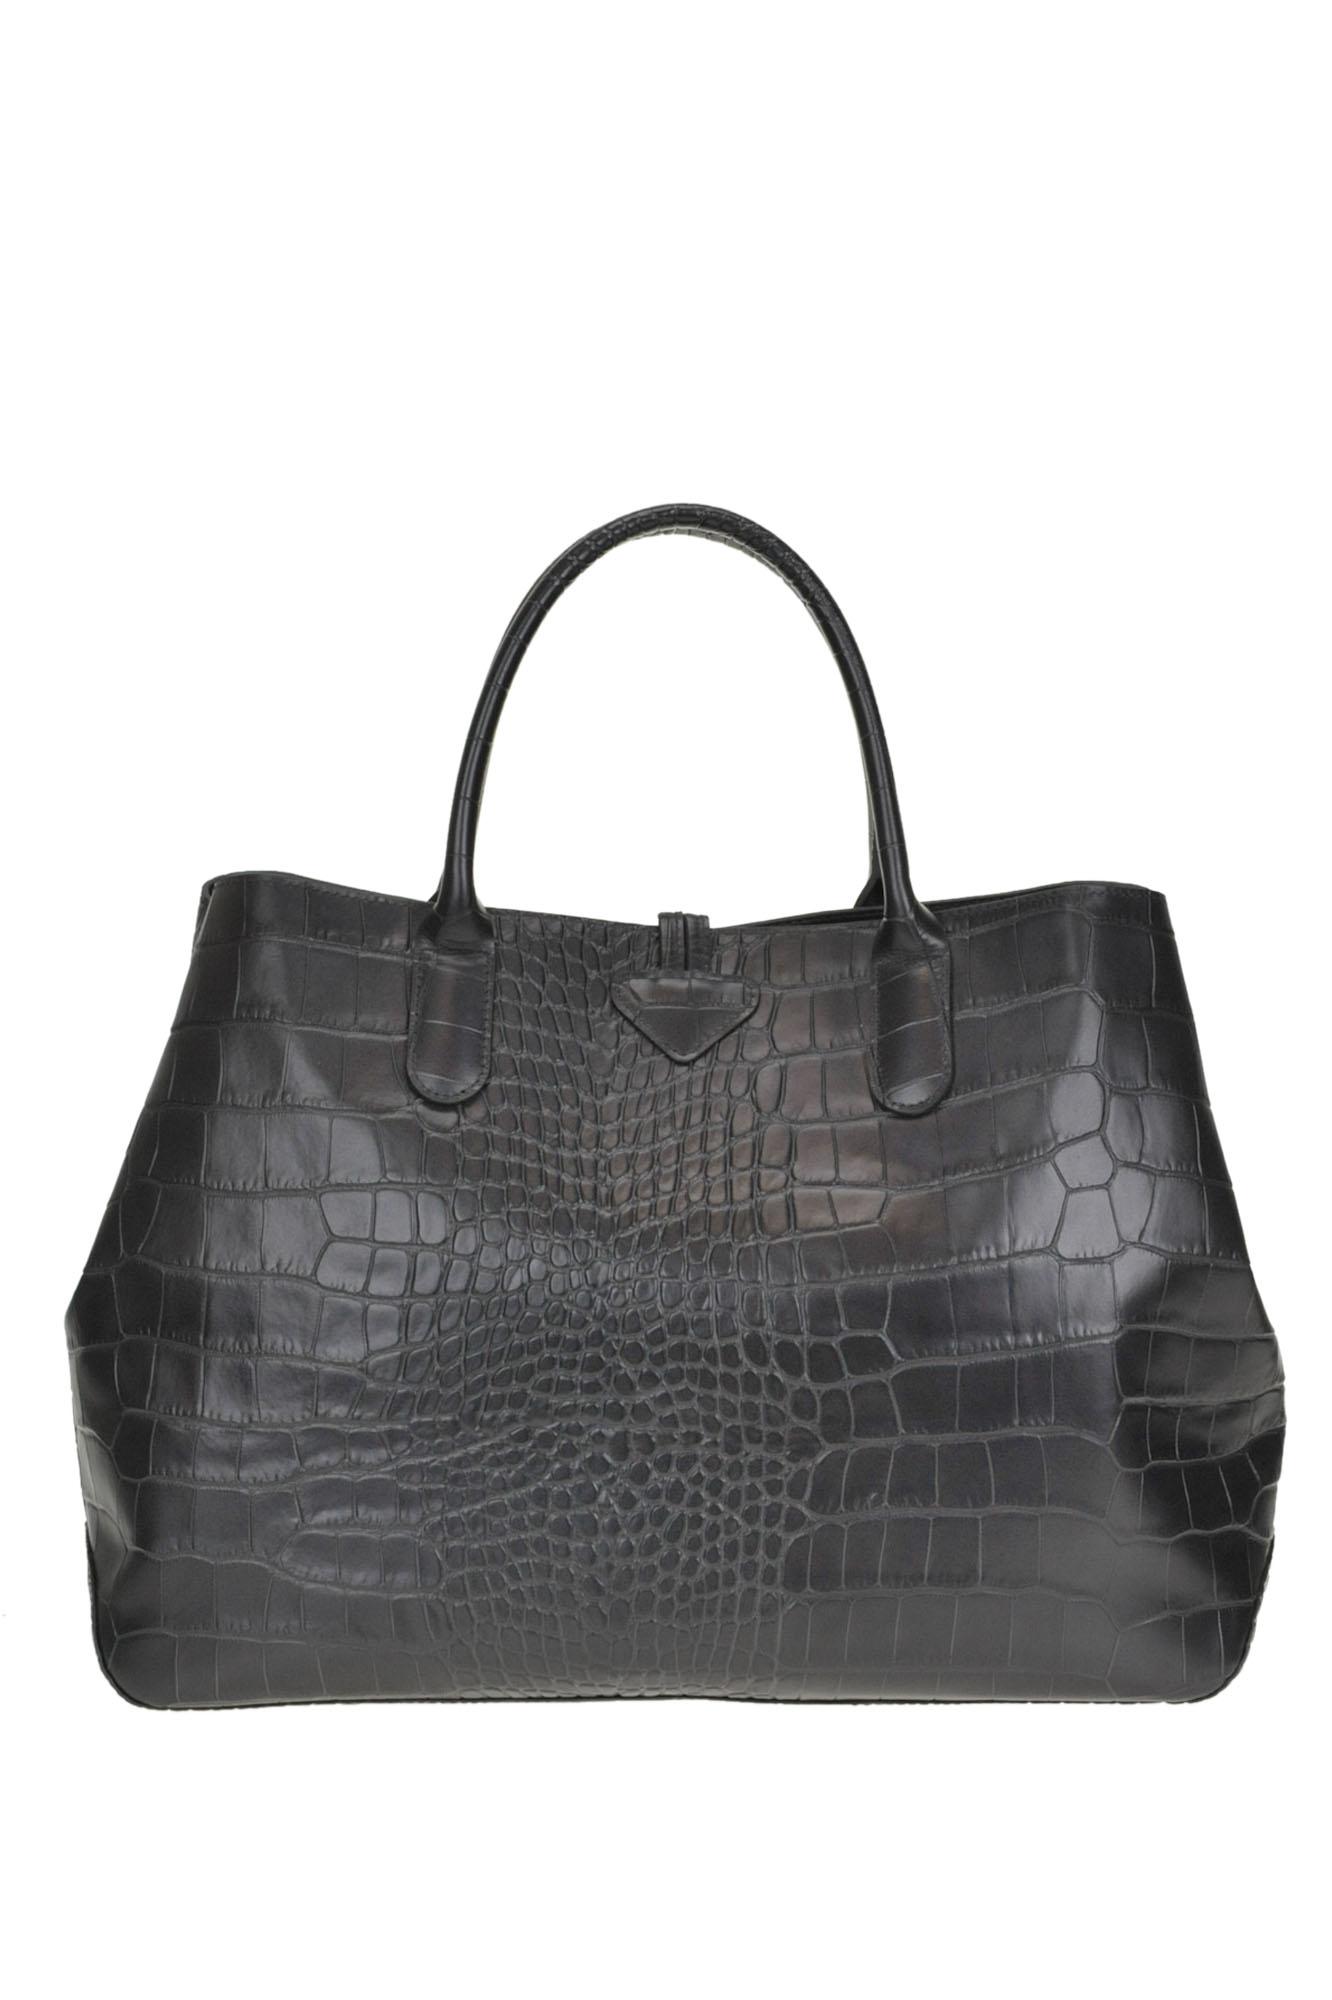 Longchamp Crocodile Print Leather Bag in Black - Lyst